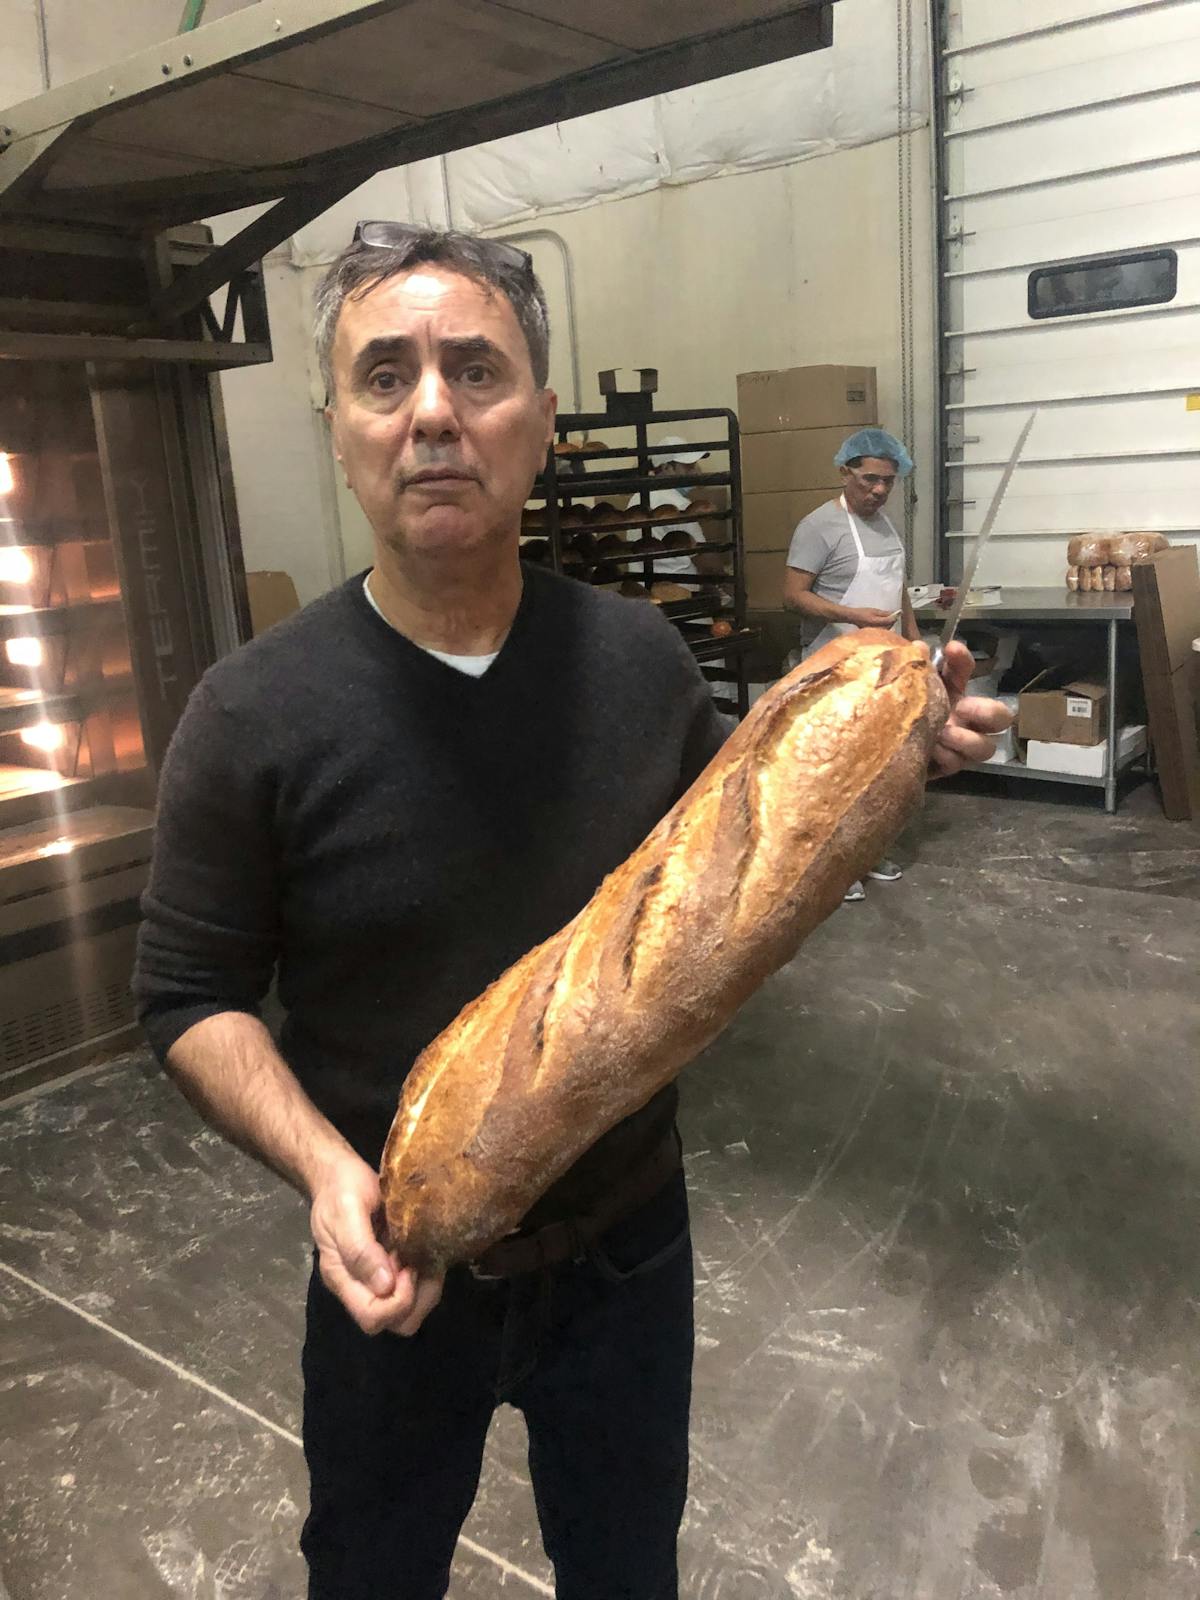 a man holding a baguette